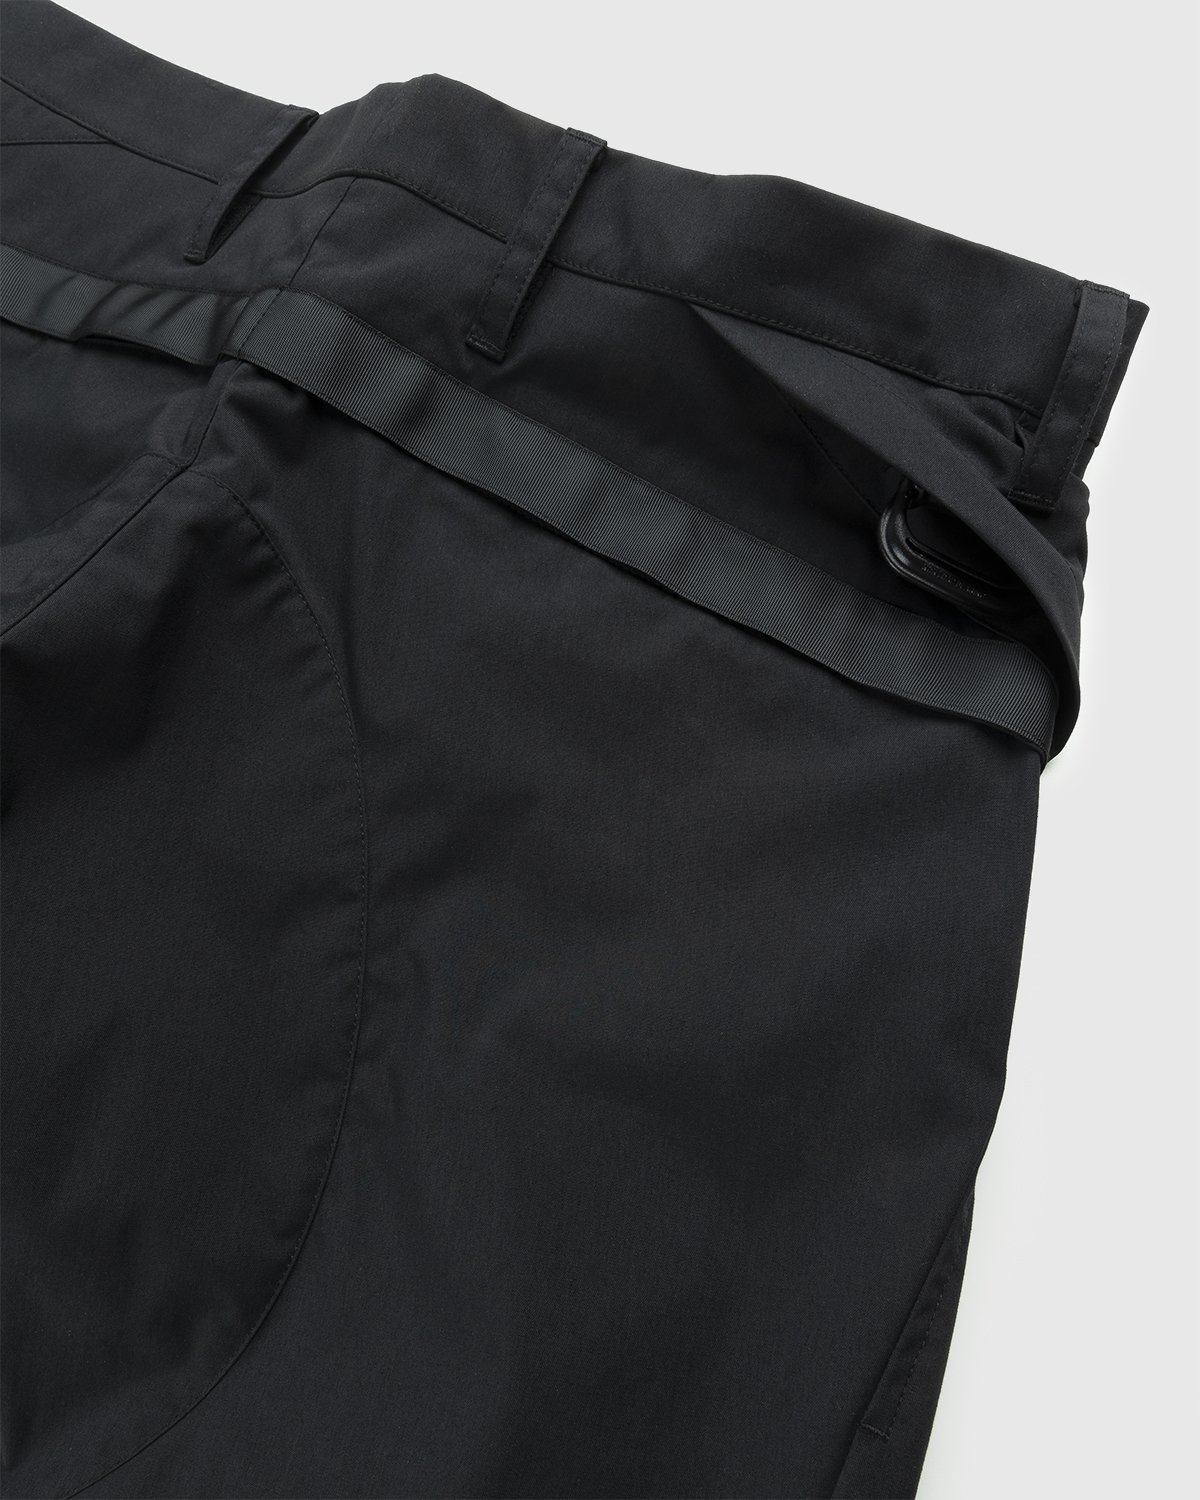 ACRONYM – P10-E Pant Black | Highsnobiety Shop